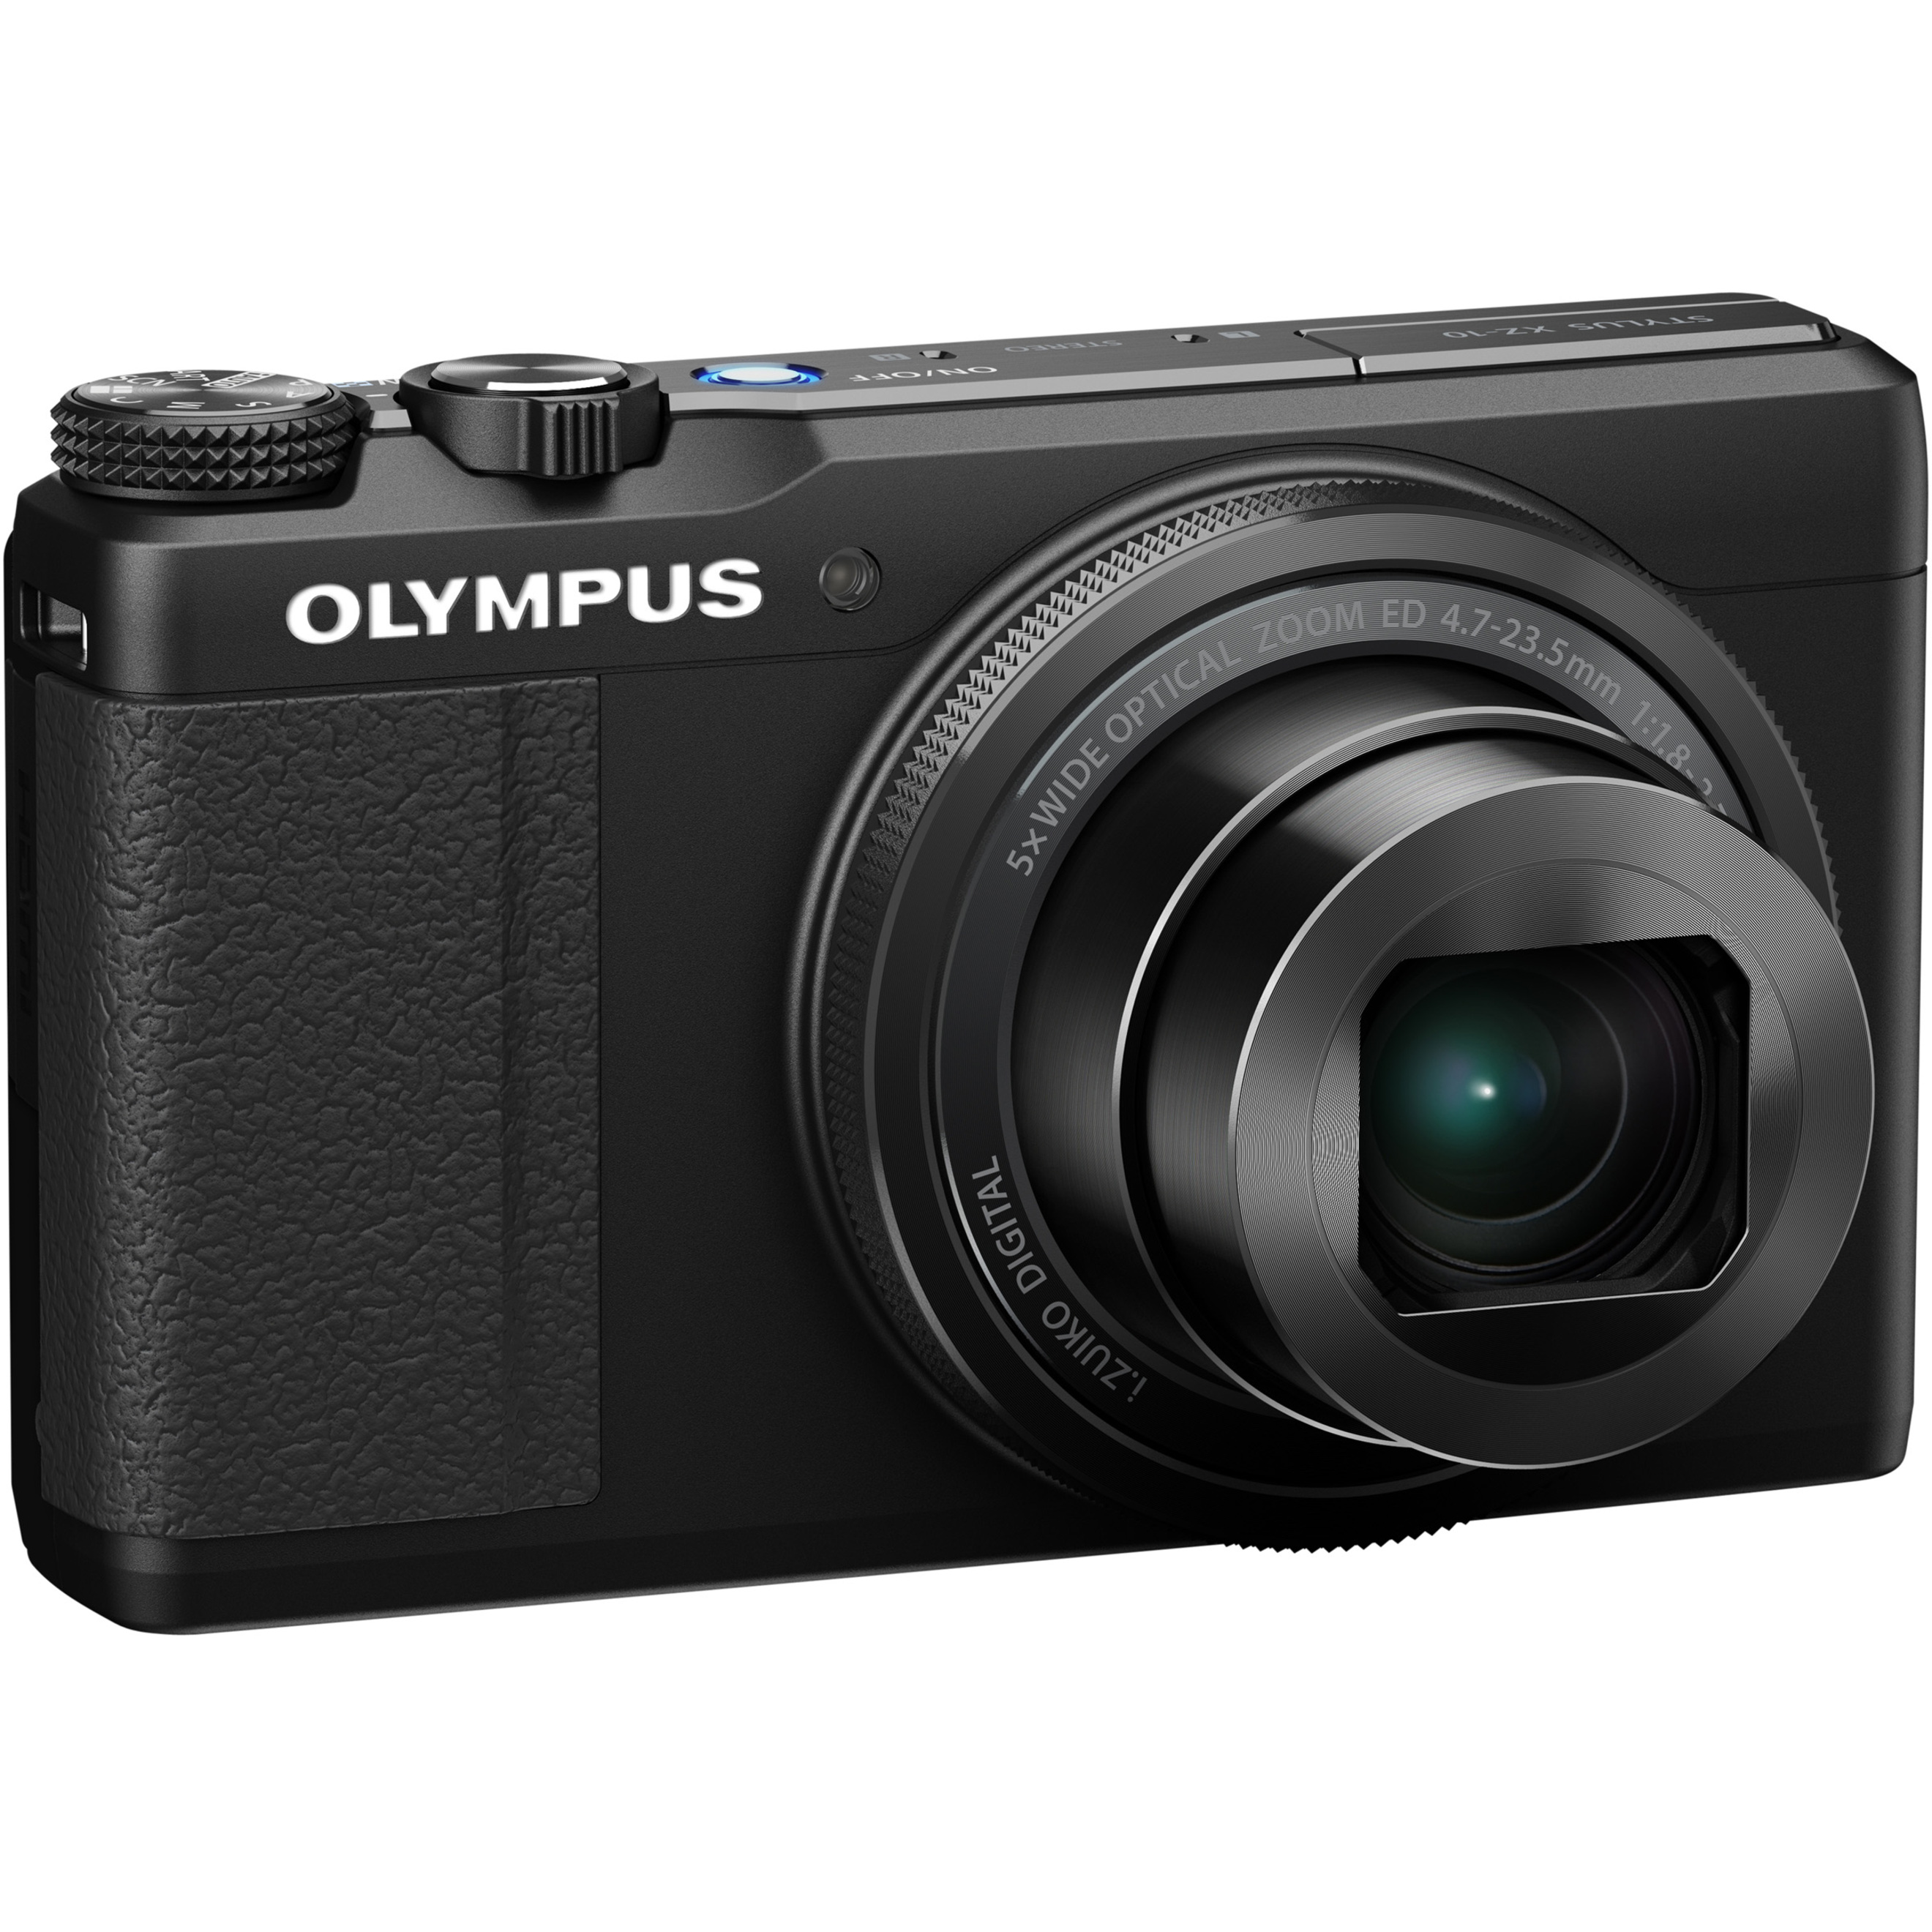 Olympus Creator XZ-10 12 Megapixel Compact Camera, Black - image 4 of 6